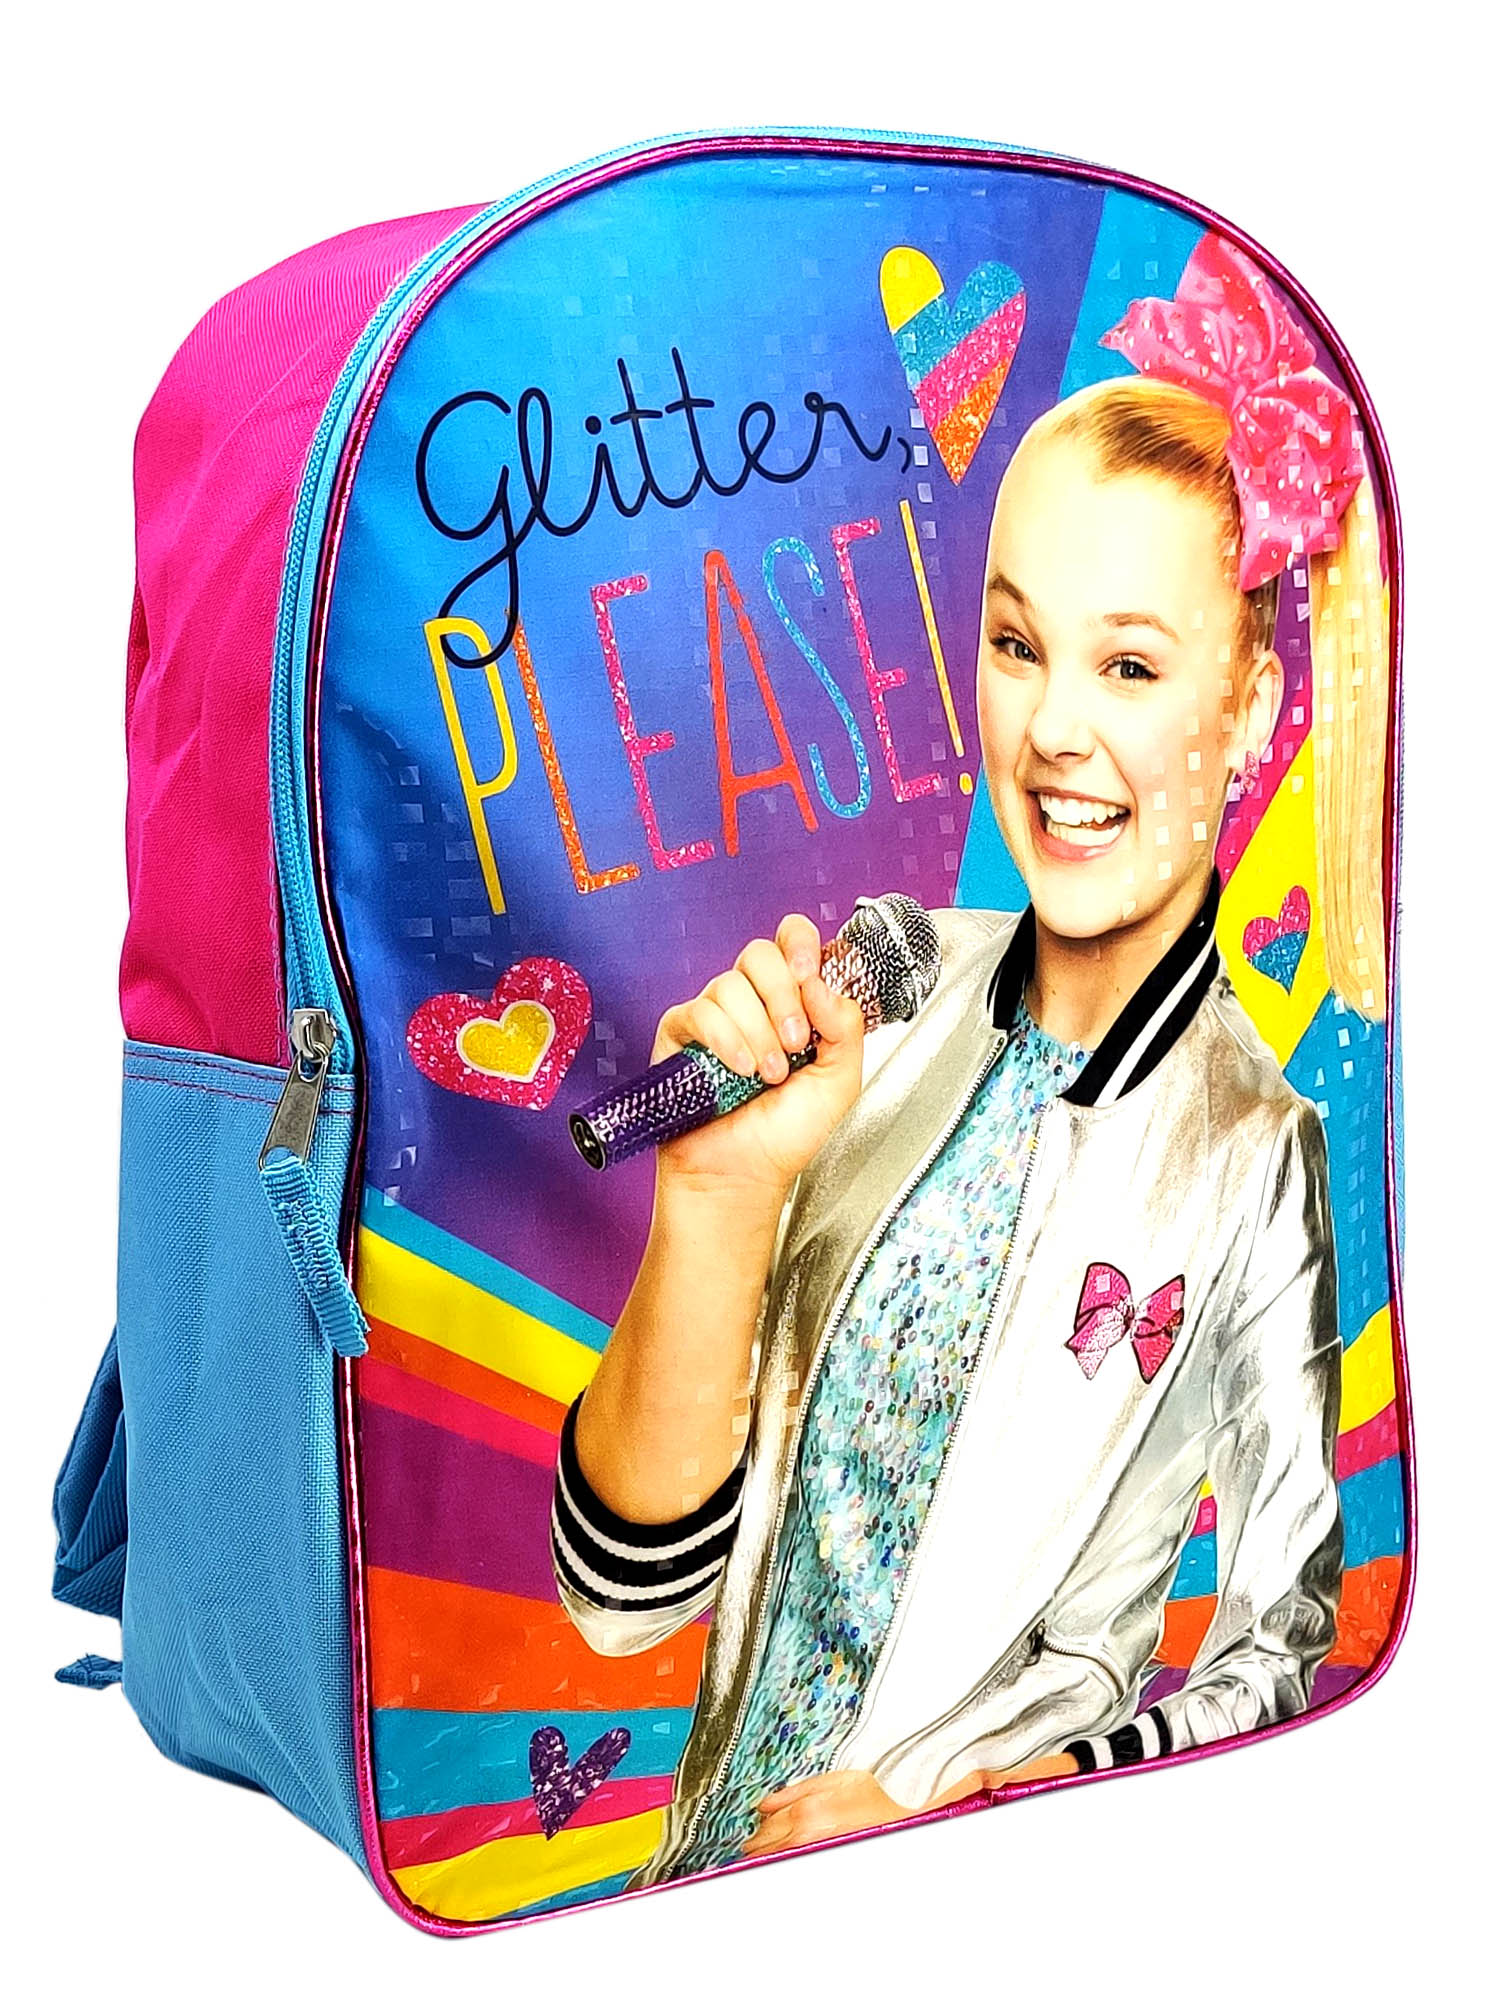 Girls JoJo Siwa Backpack 15" Glitter Please! Rainbow Hearts Pink Bow - image 2 of 3